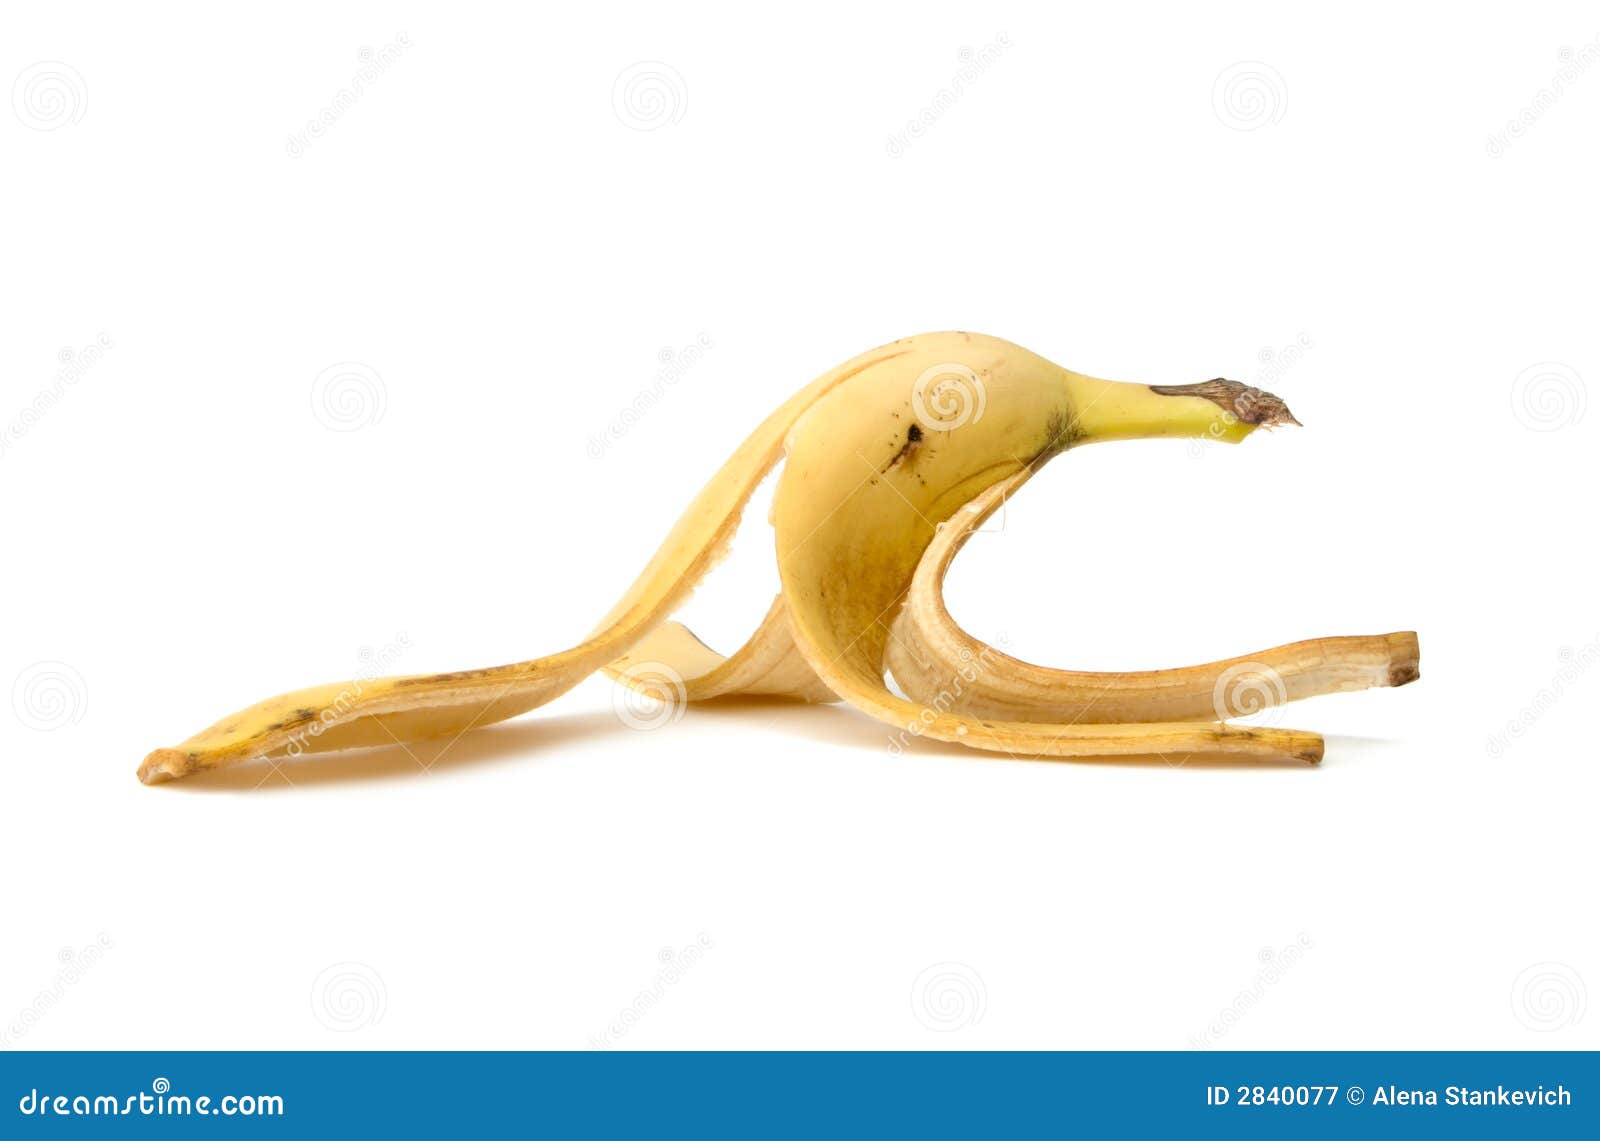 banana rind